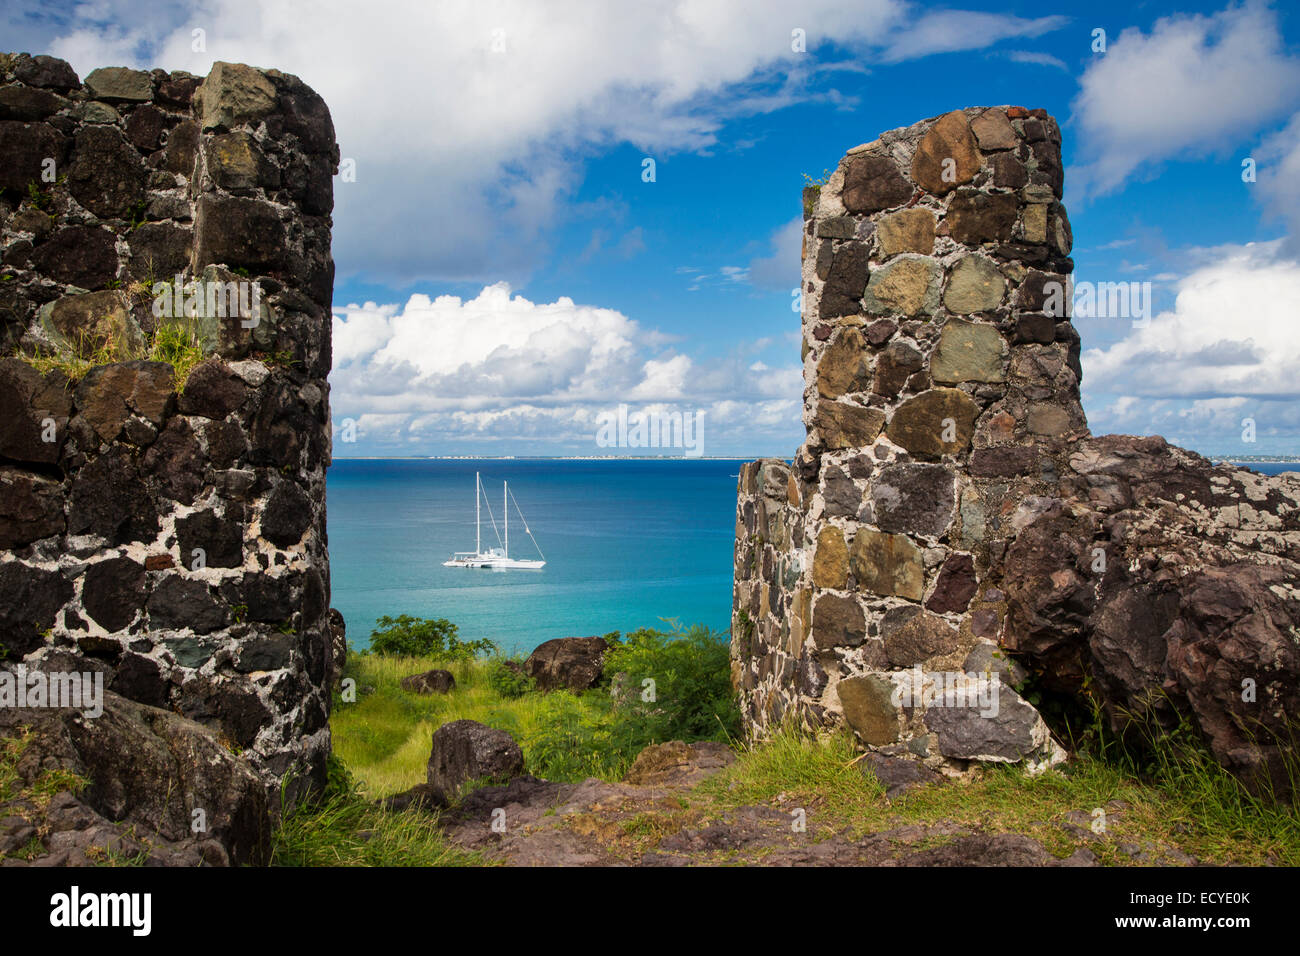 Fort Saint Louis overlooking sailboat in Marigot Bay, Marigot, Saint Martin, West Indies Stock Photo